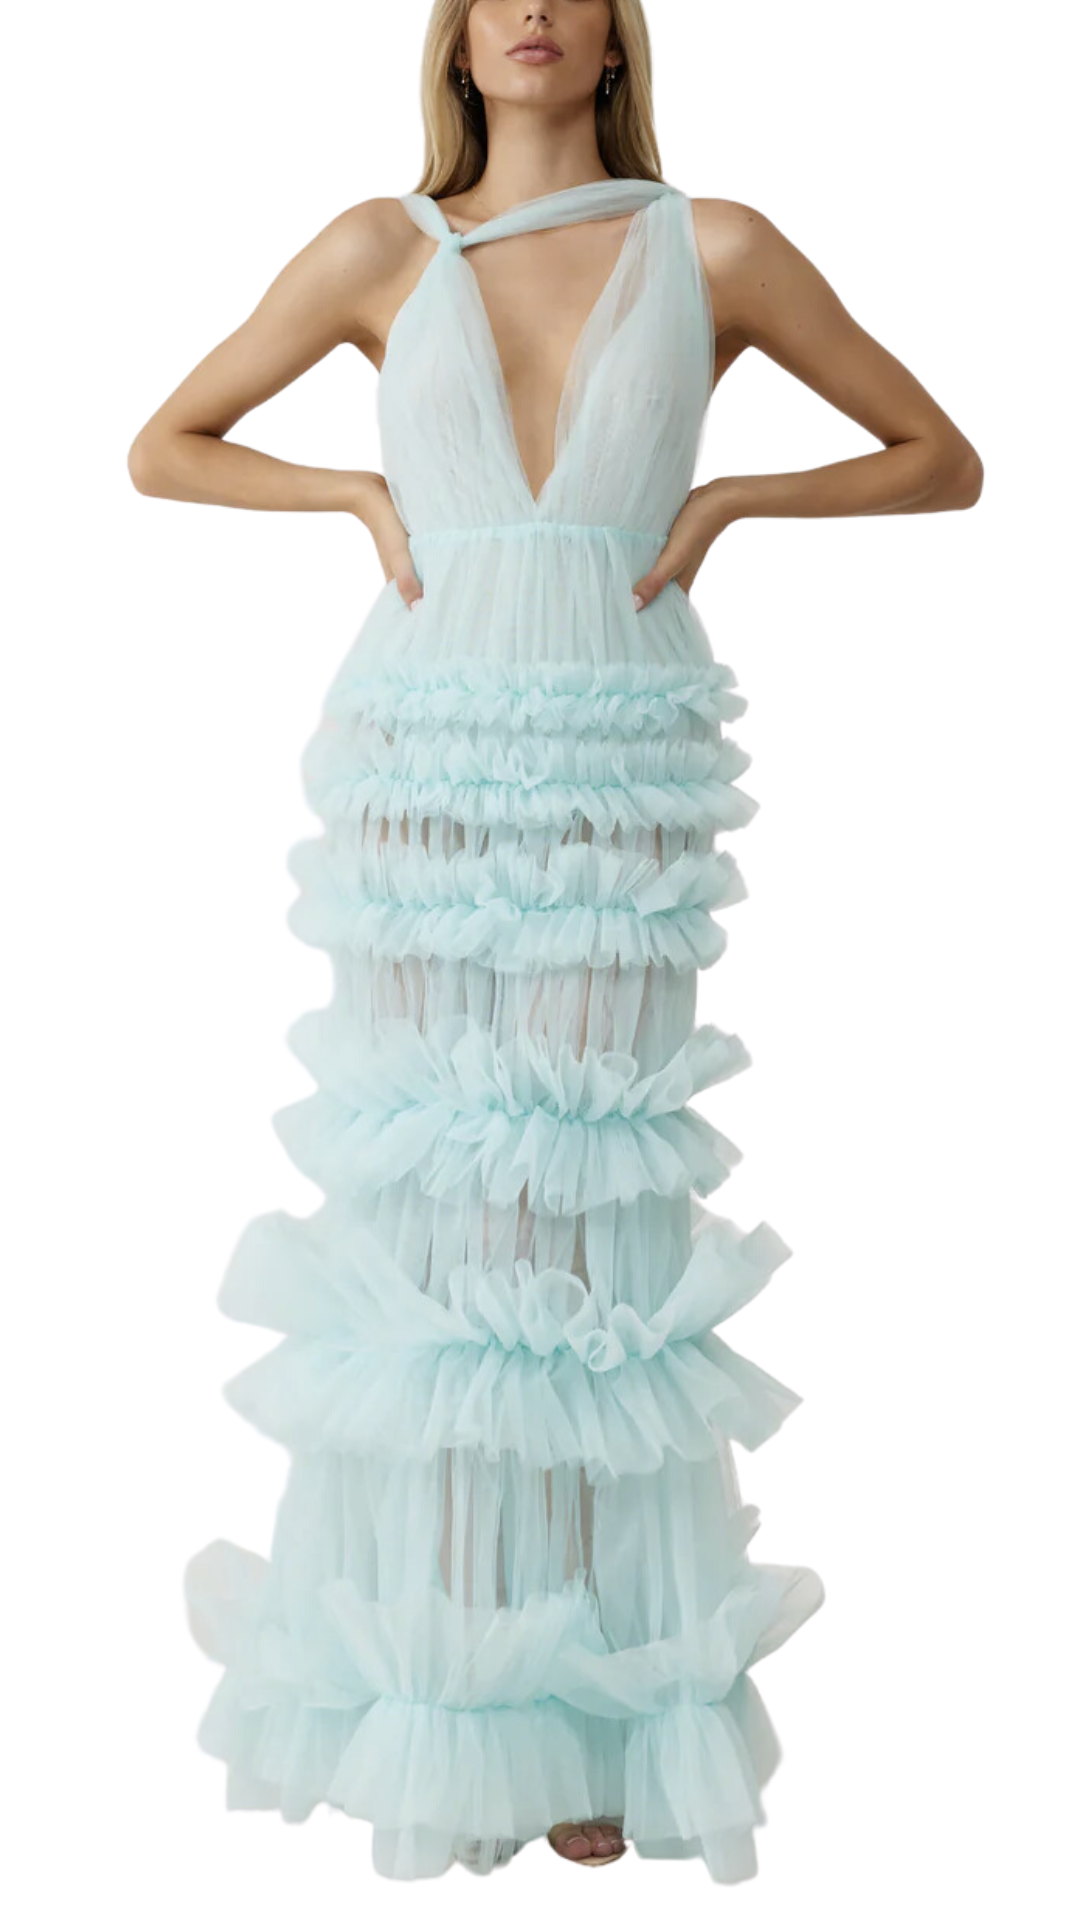 Lexi Mariella Tulle Dress in Seafoam